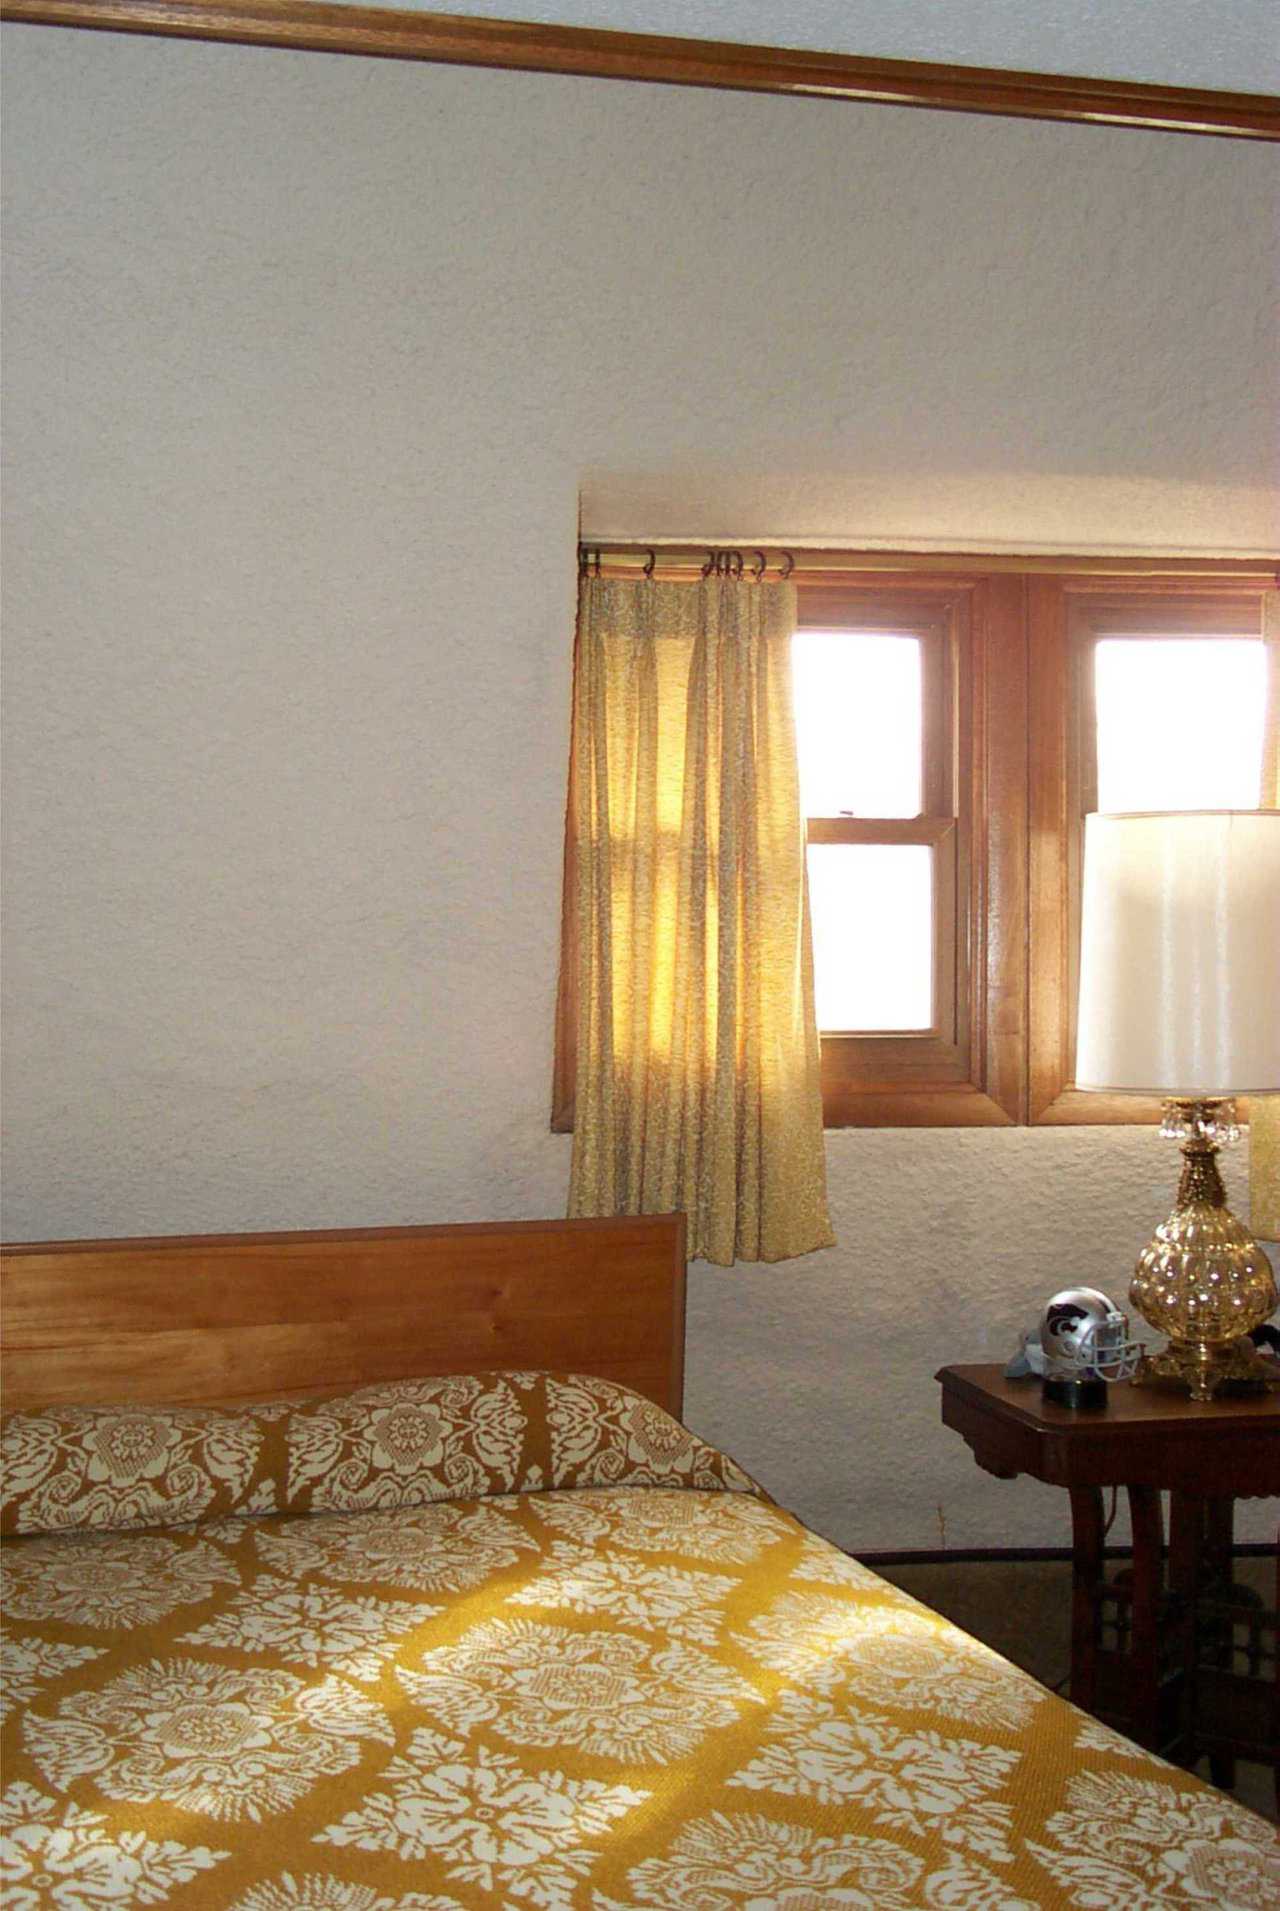 Bedroom — Warm winter sunlight enters the spacious bedroom through wood framed windows.